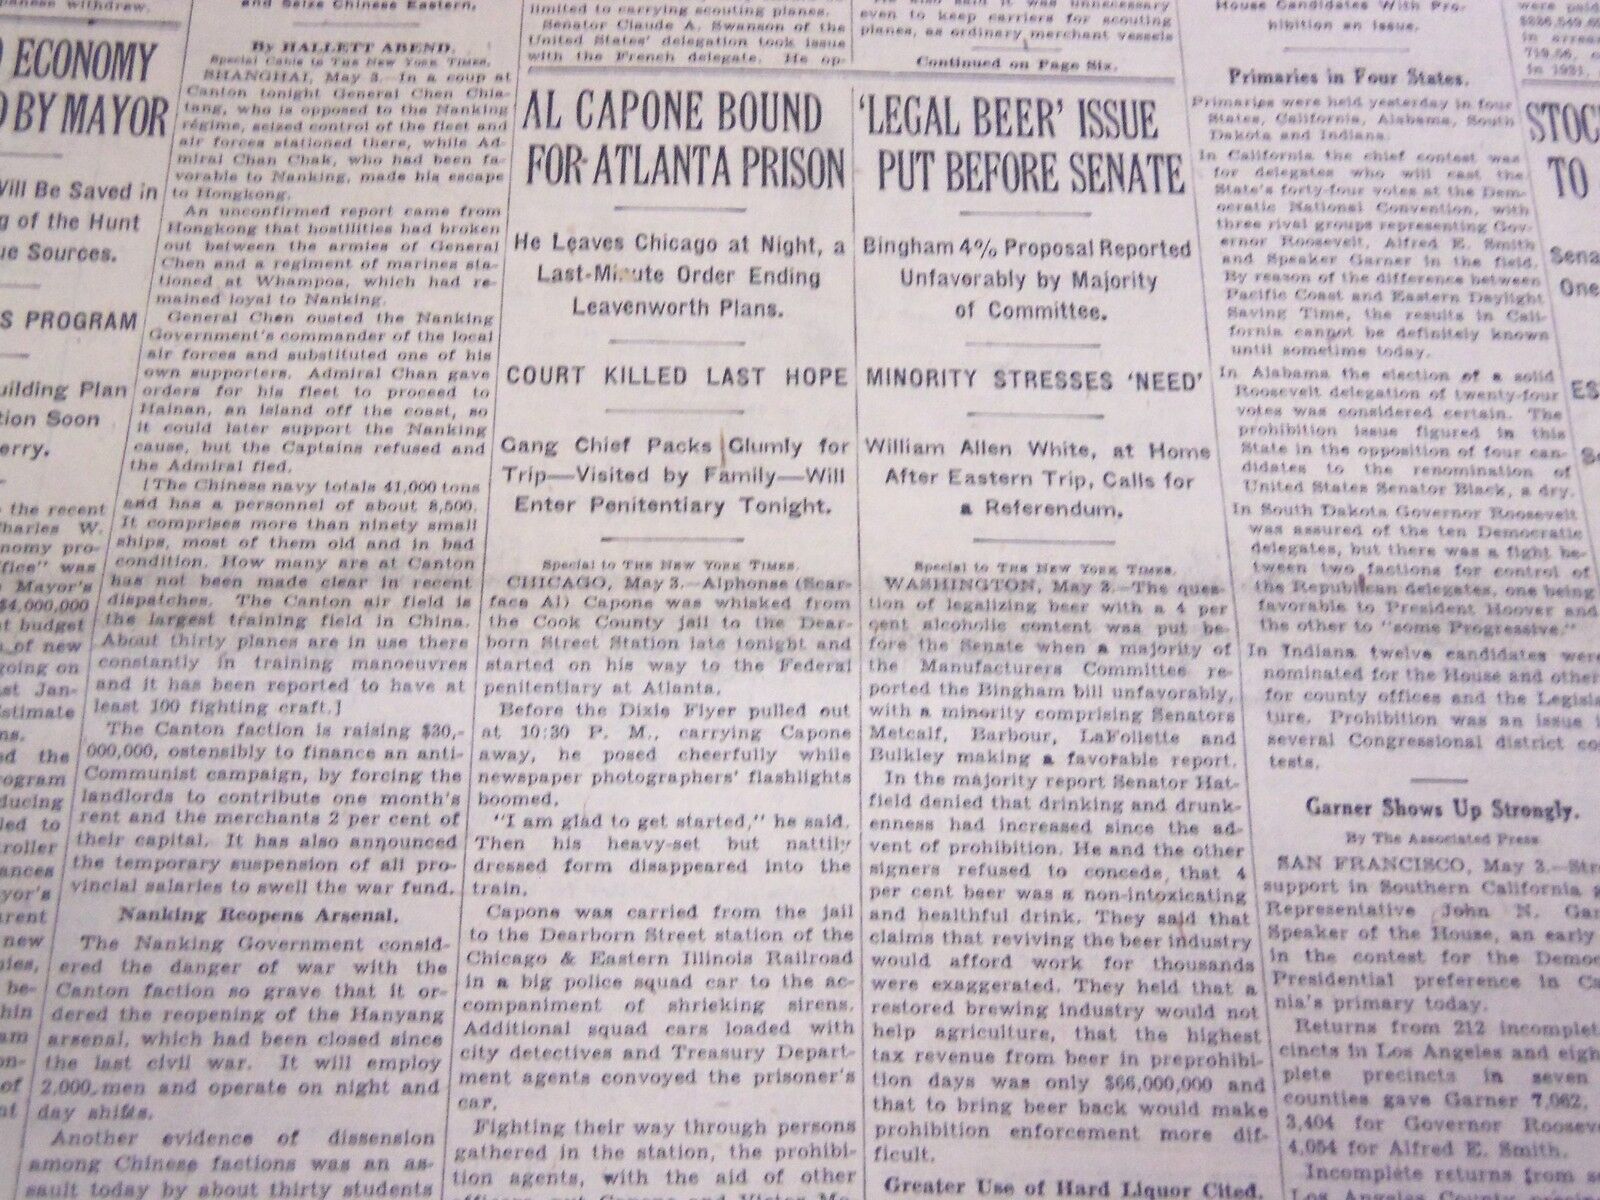 1932 MAY 4 NEW YORK TIMES - AL CAPONE BOUND FOR ATLANTA PRISON - NT 4759